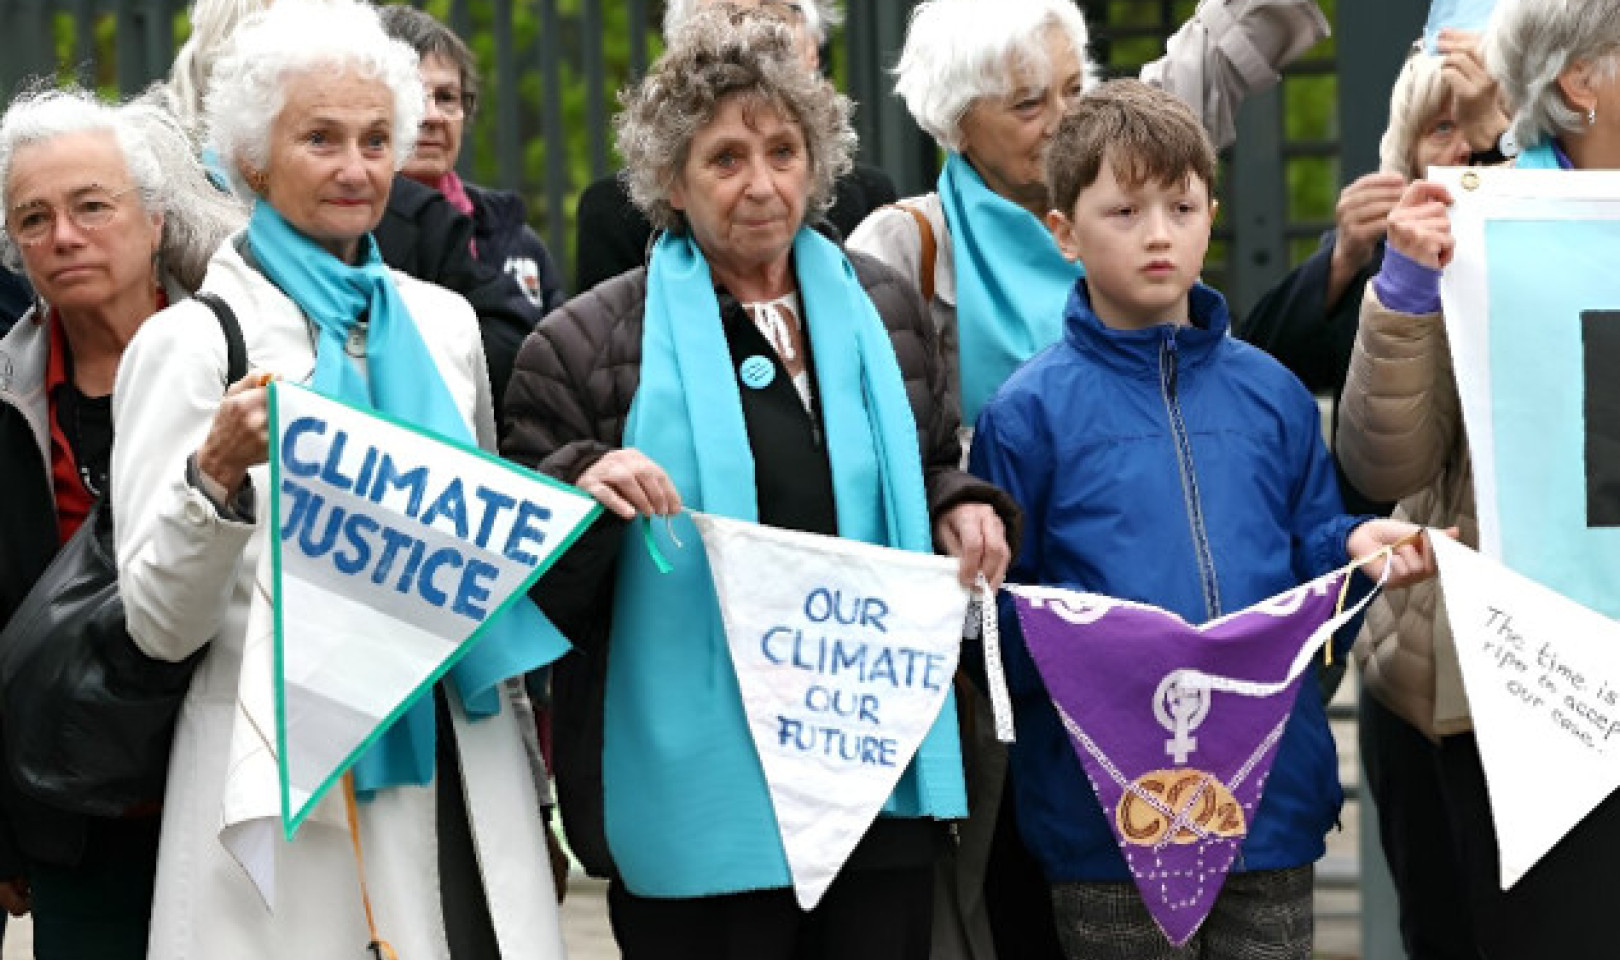 Wanita Switzerland Menetapkan Preseden Bersejarah dalam Pertempuran Undang-undang Perubahan Iklim